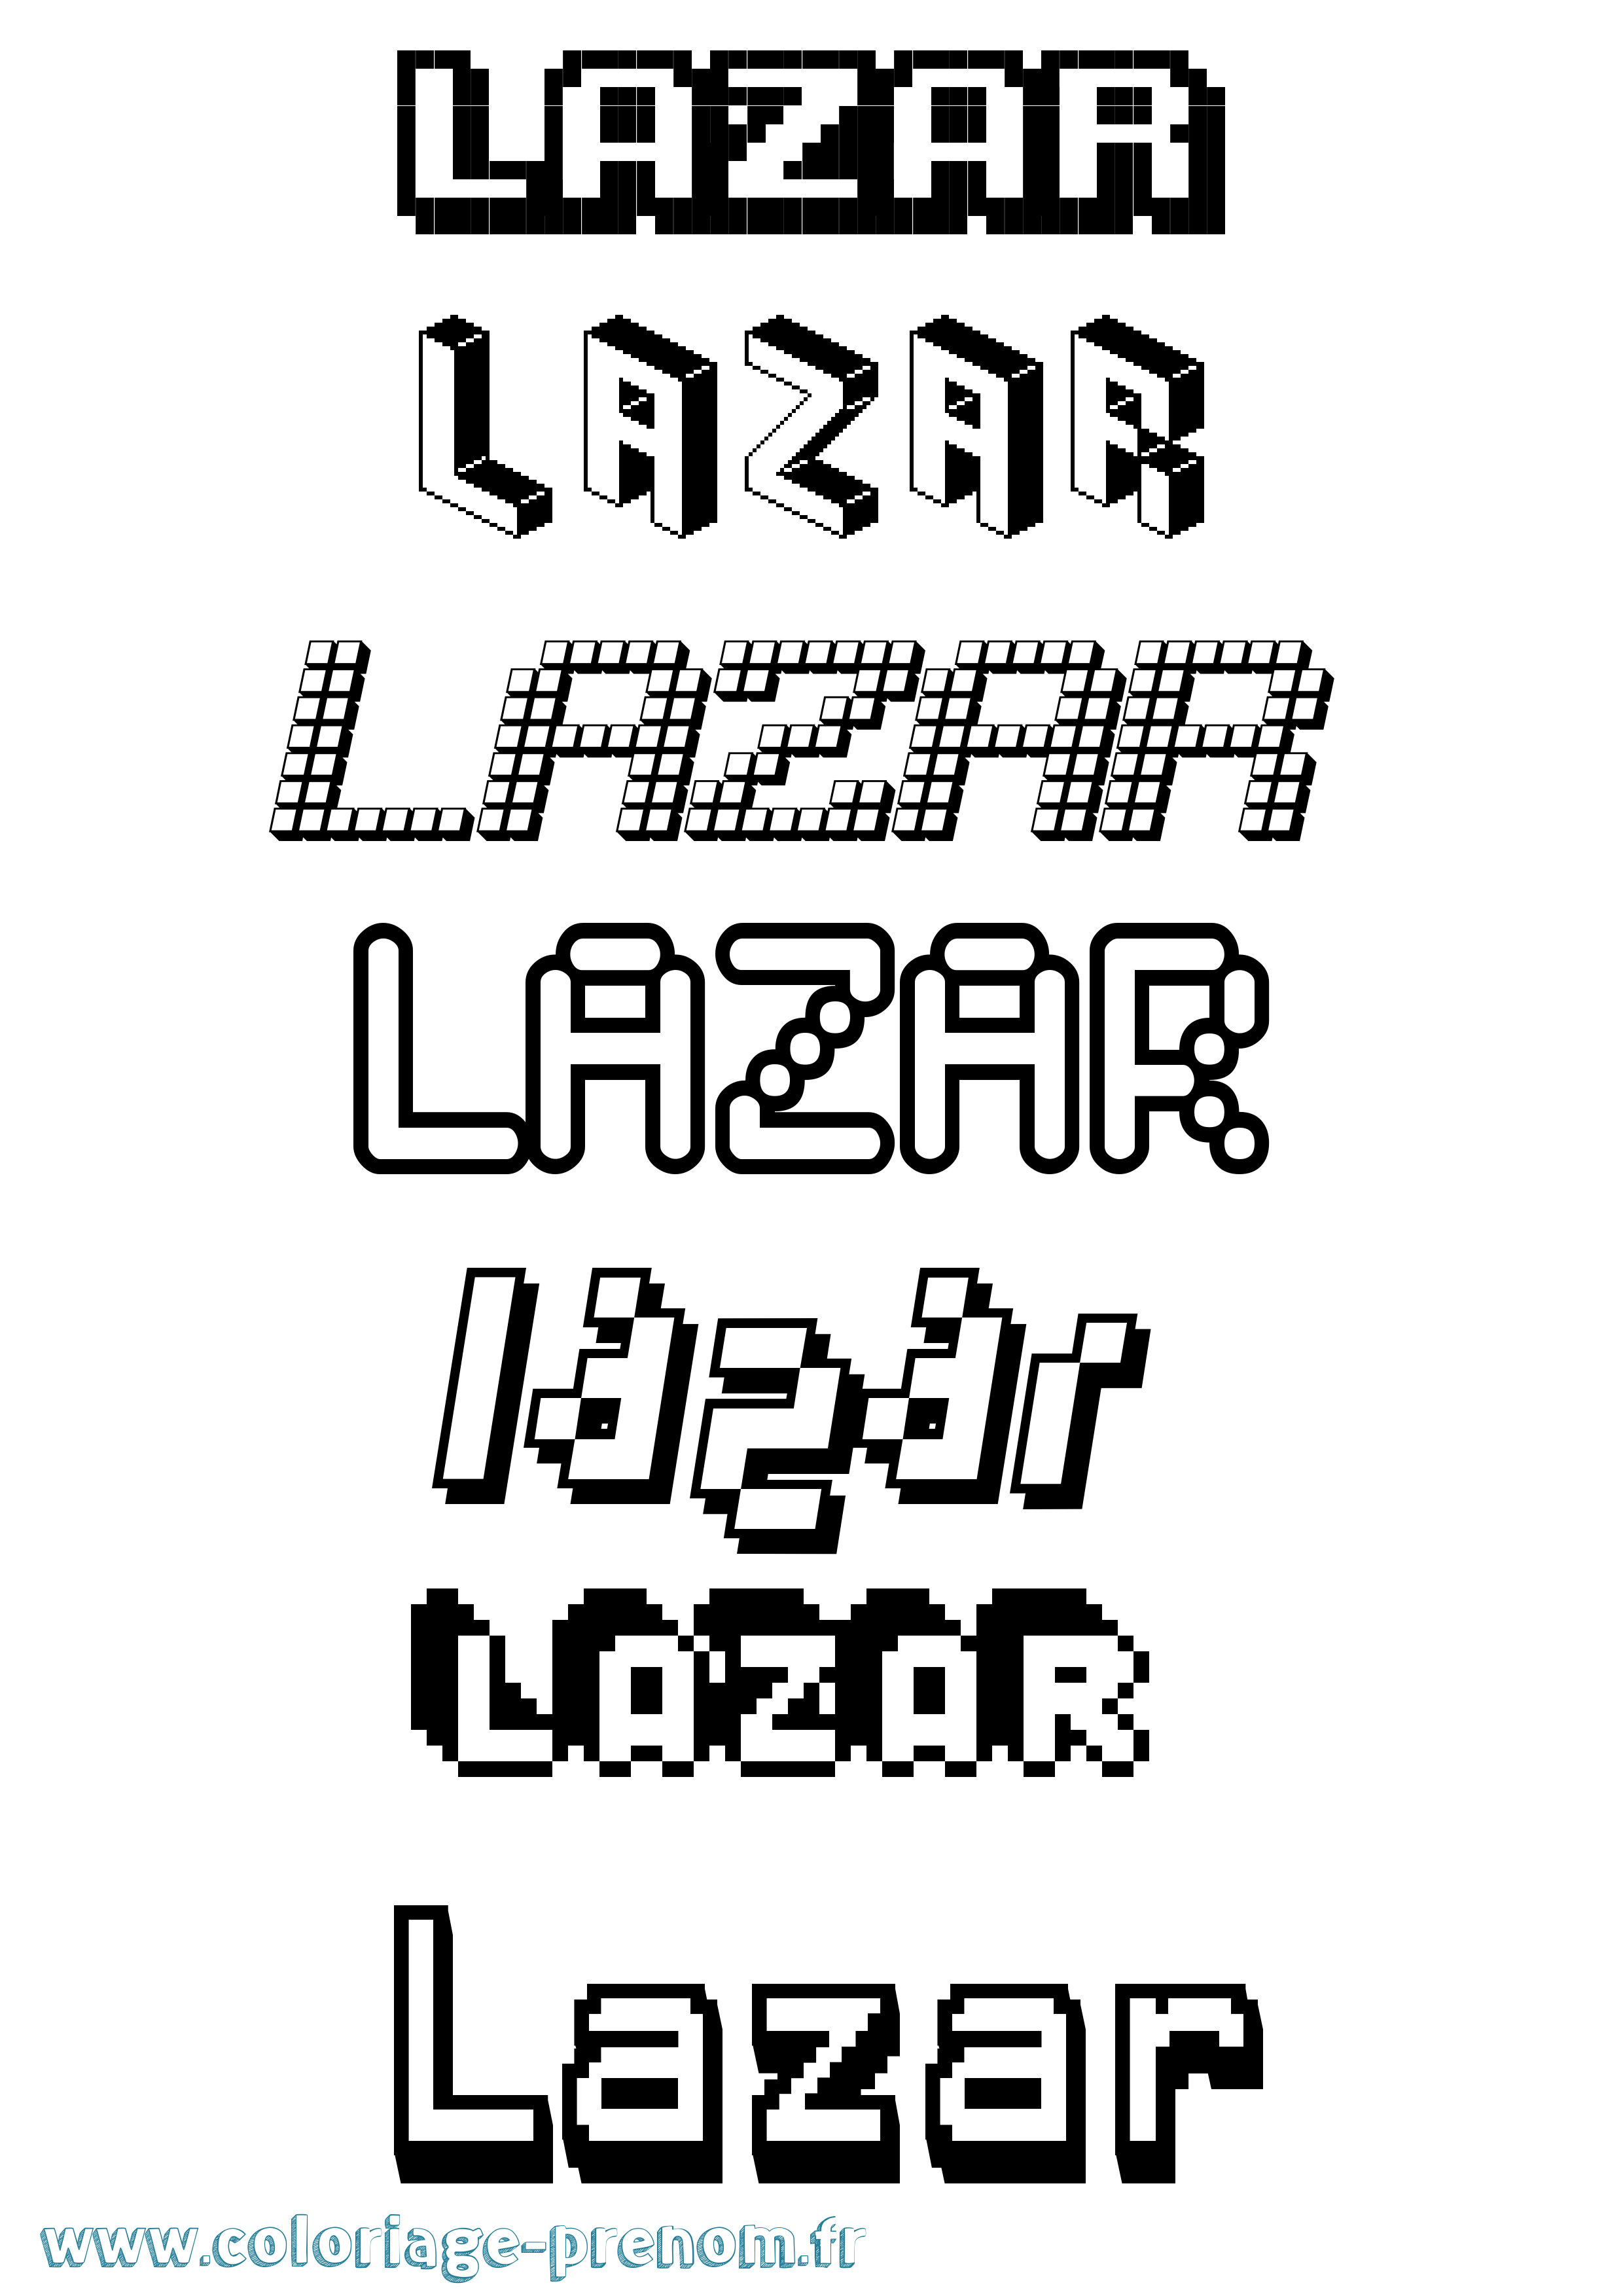 Coloriage prénom Lazar